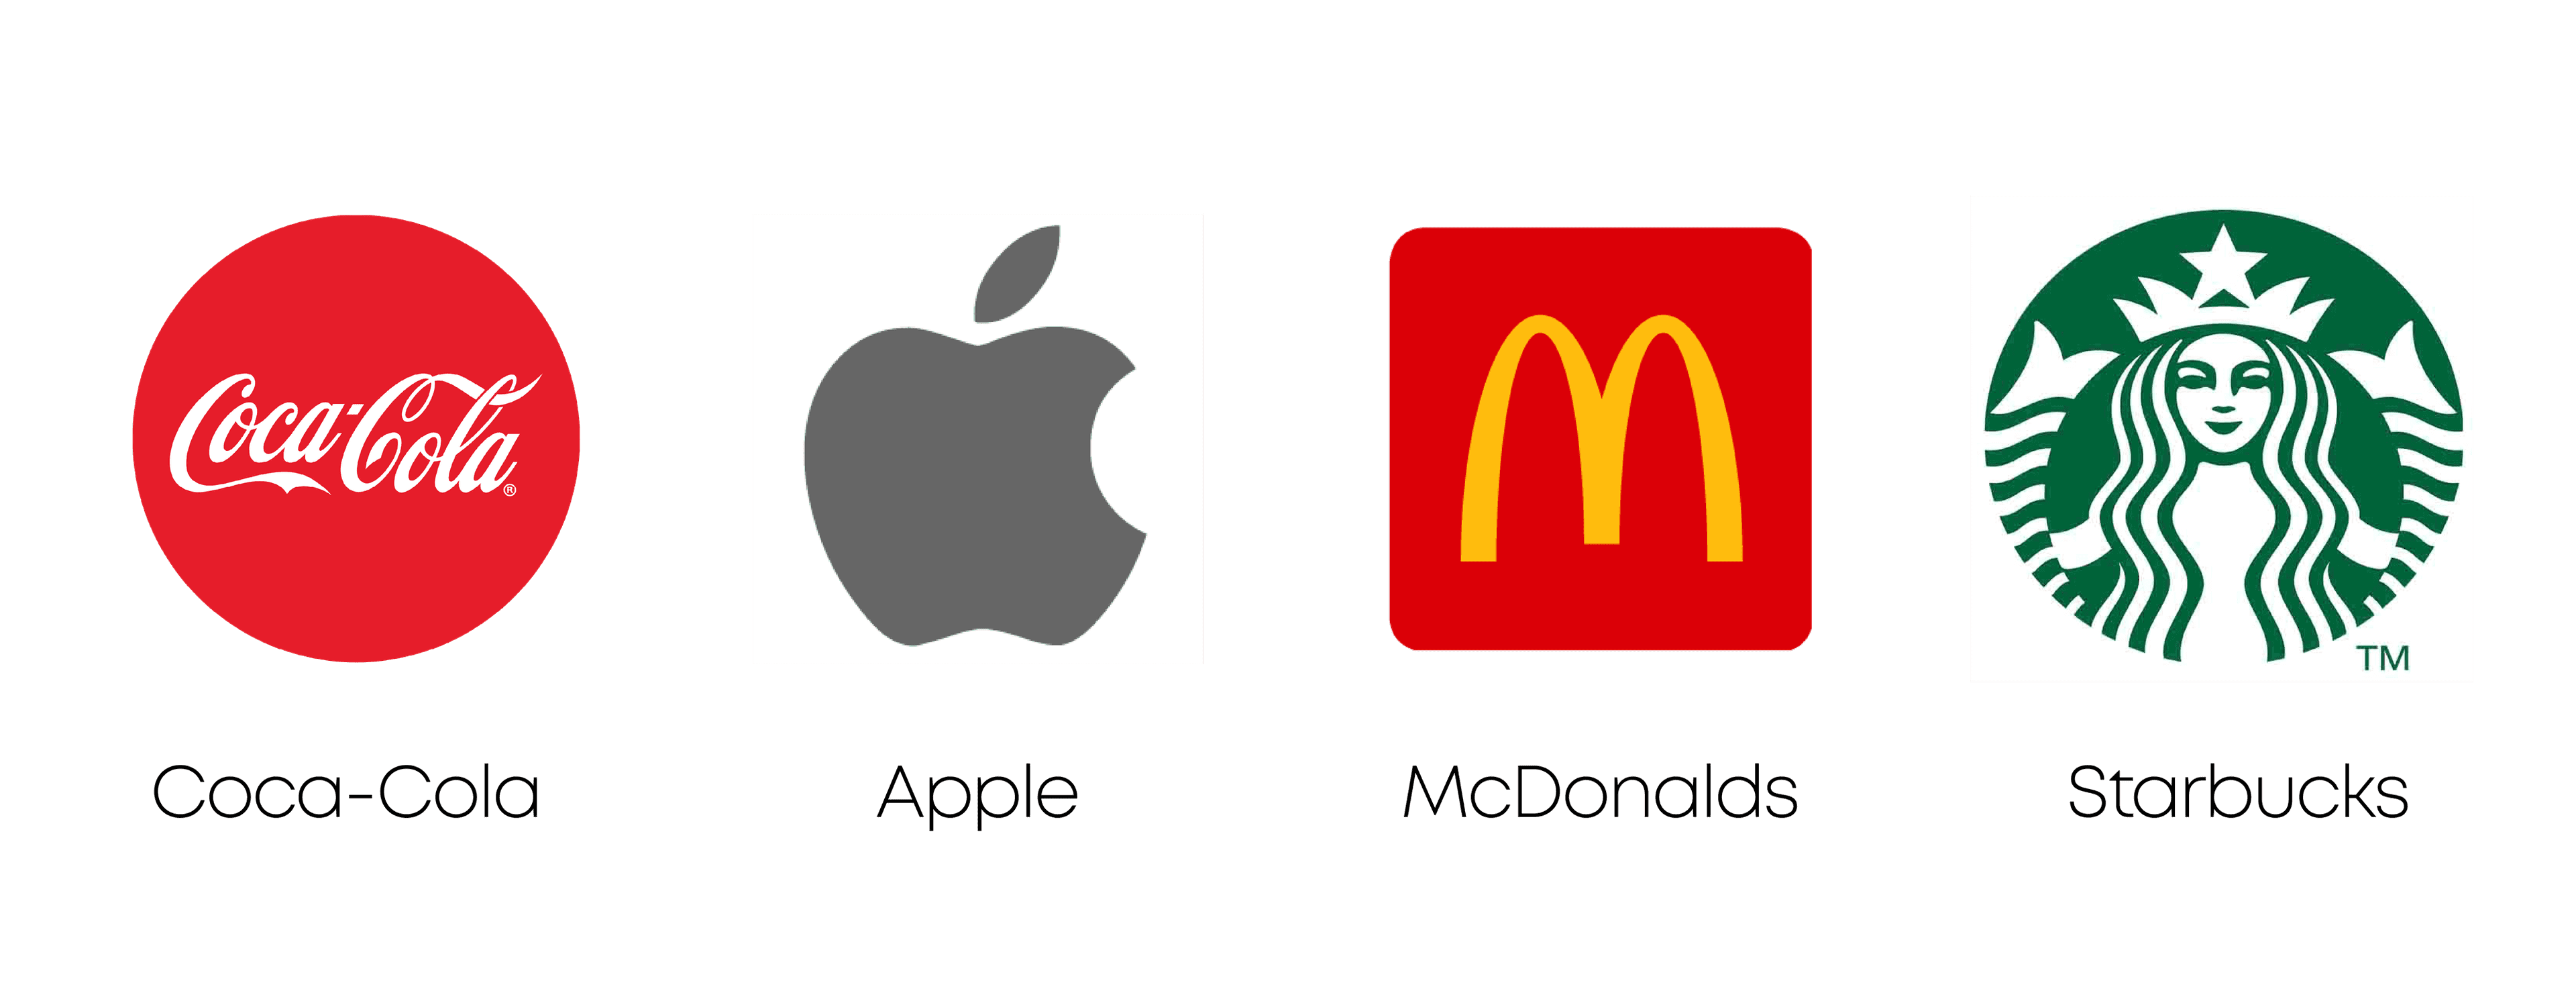 Coke, Apple, McDonlads and Starbucks logos in a line